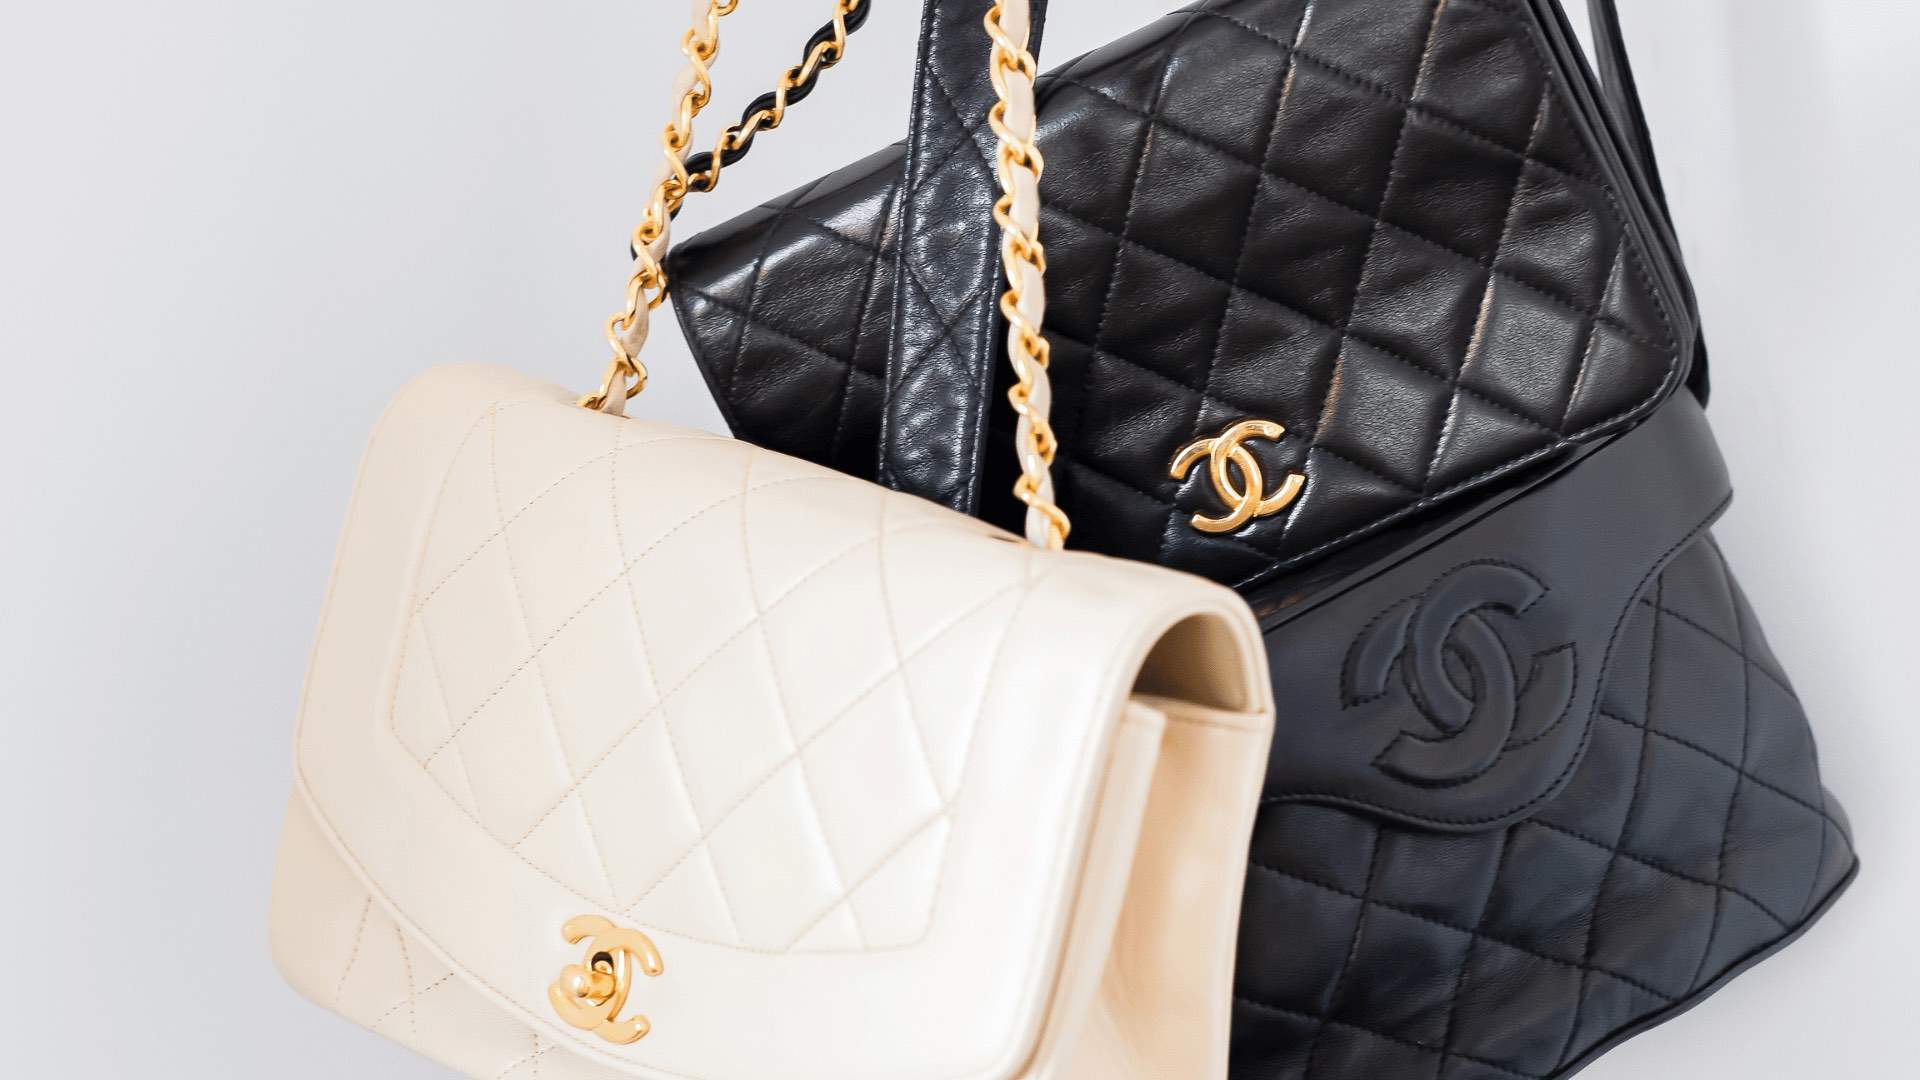 Three vintage Chanel bags.